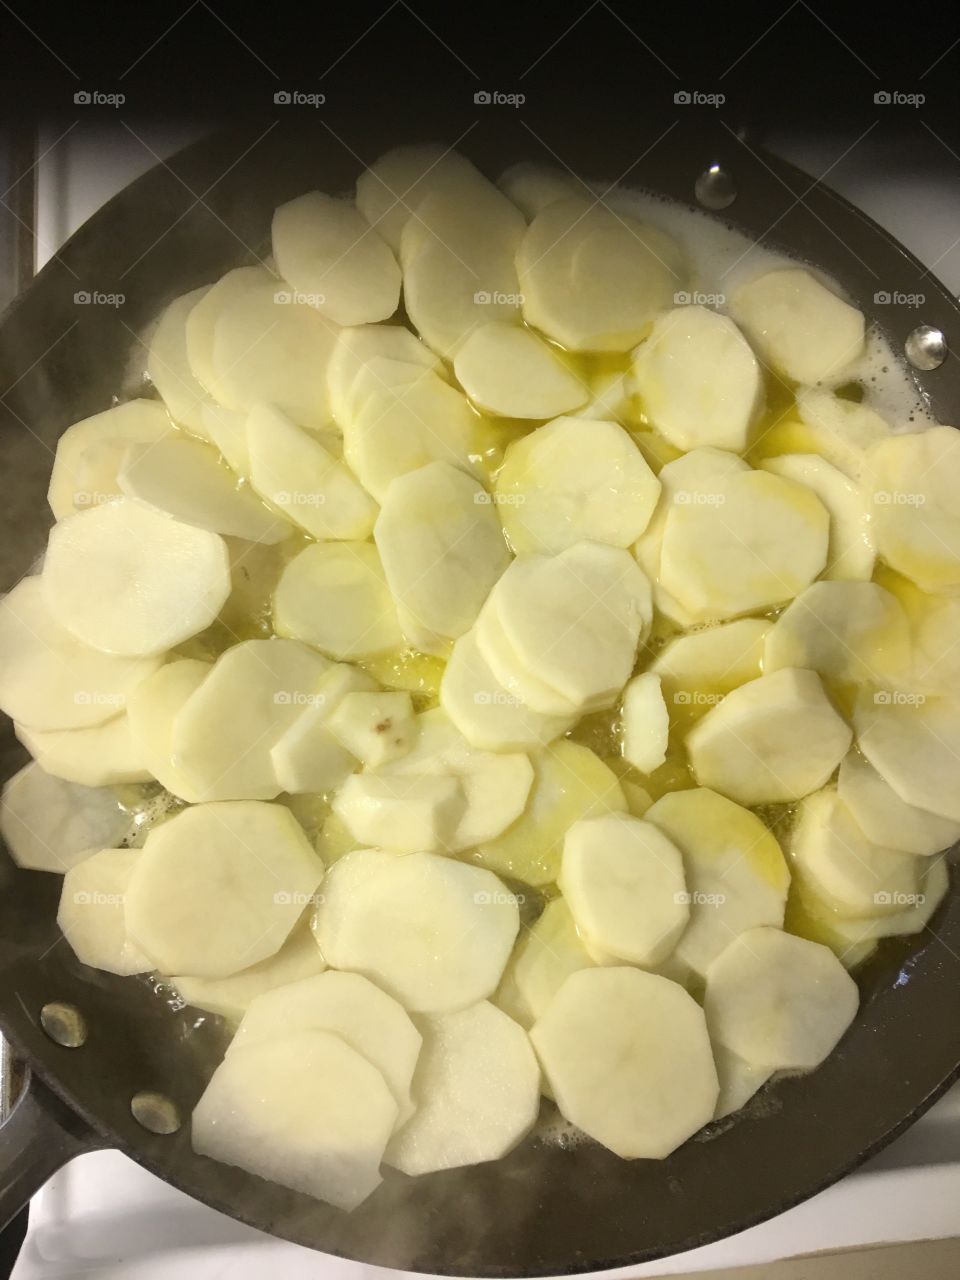 Fried potatoes 